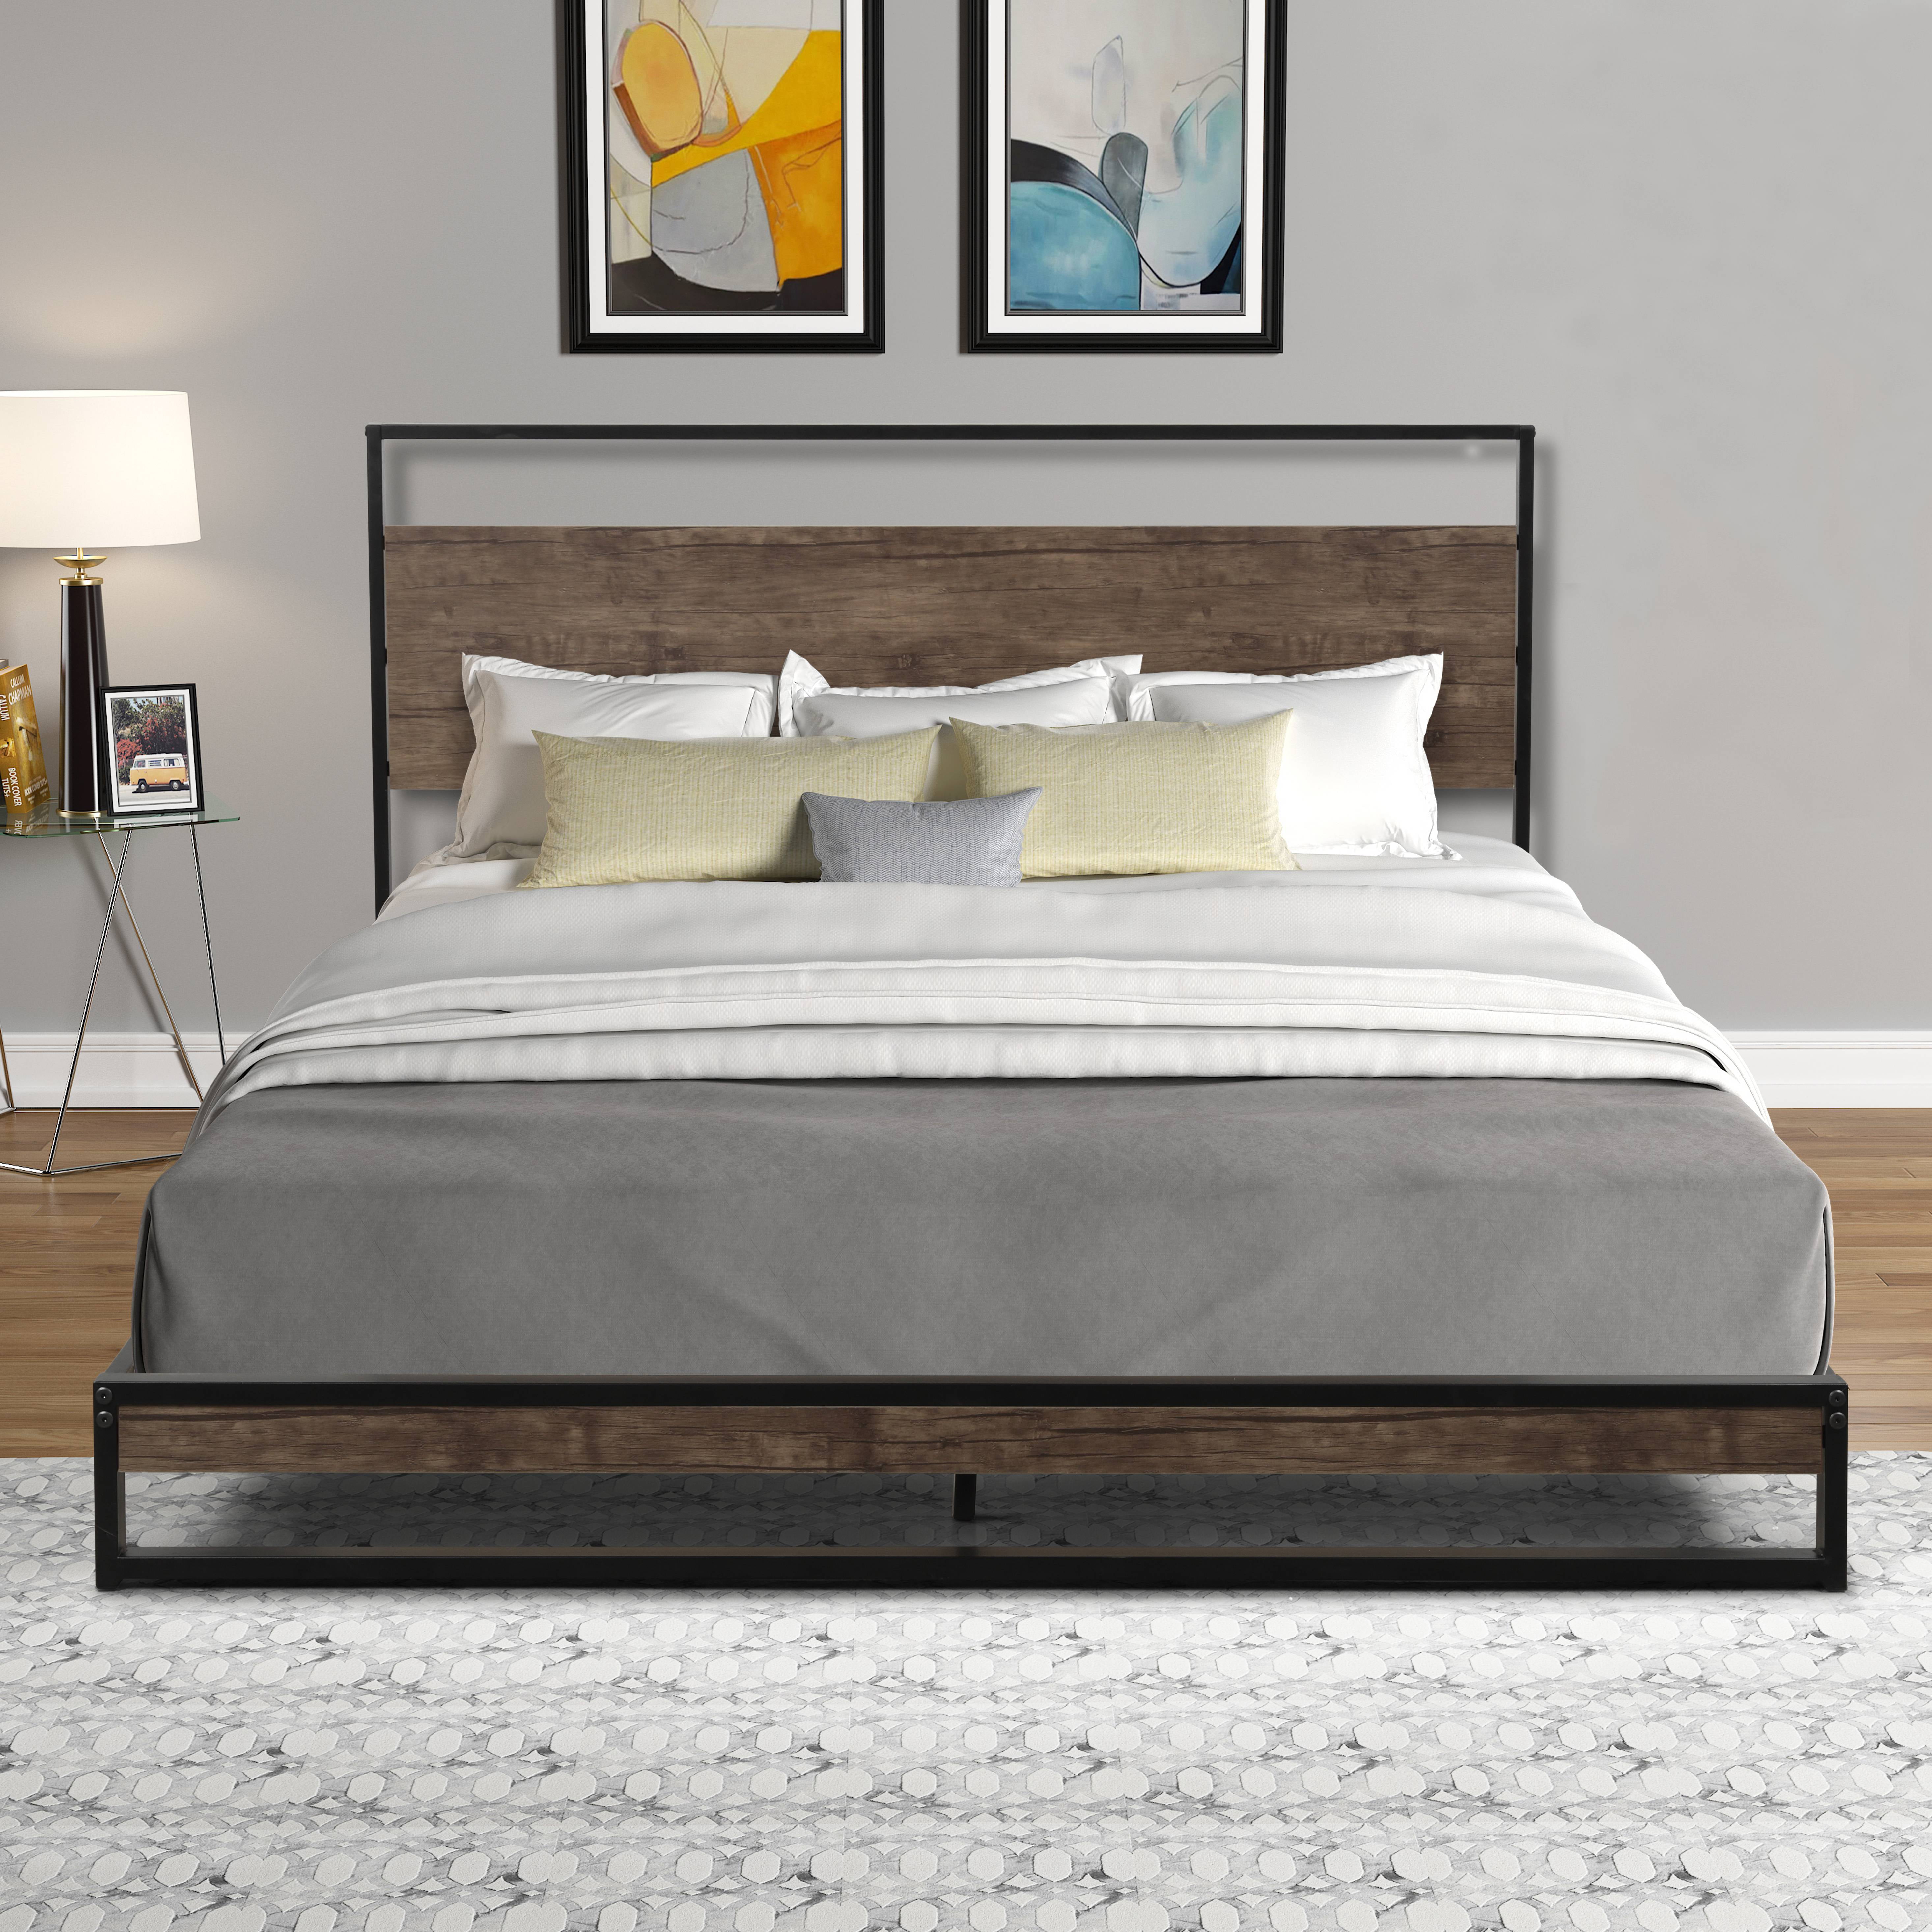 Queen Size Bed Frame Modern Industrial, Modern Industrial Bed Frame